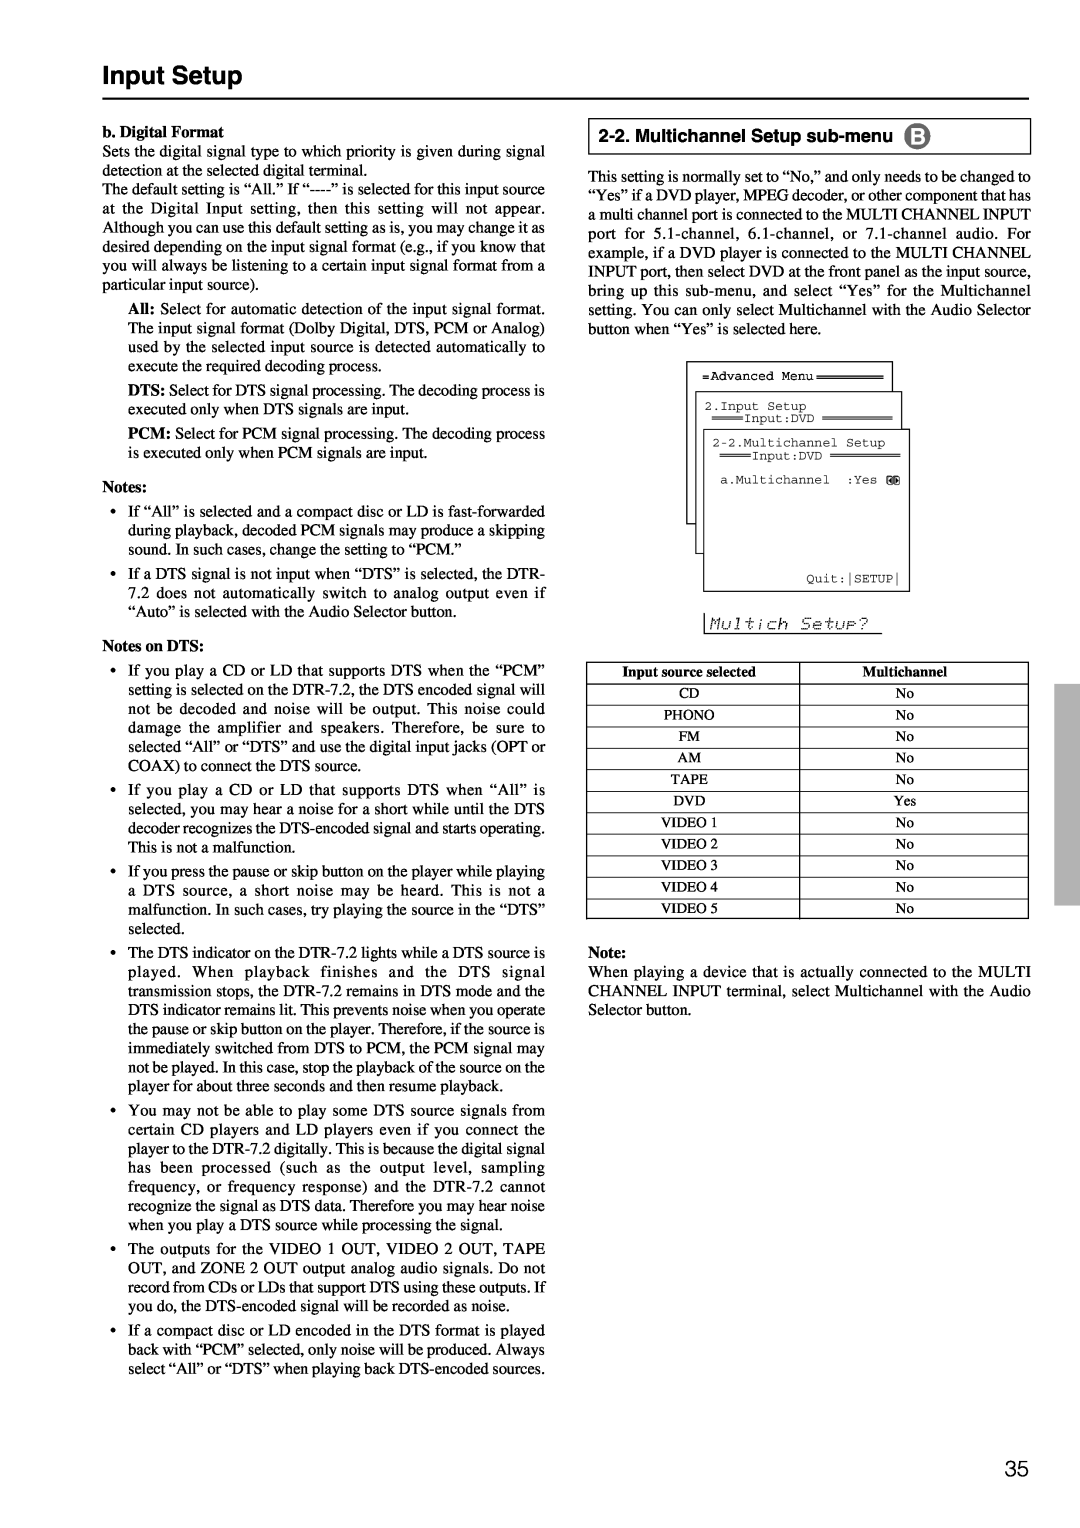 Integra DTR-7.2 instruction manual Input Setup, Multichannel Setup sub-menu 